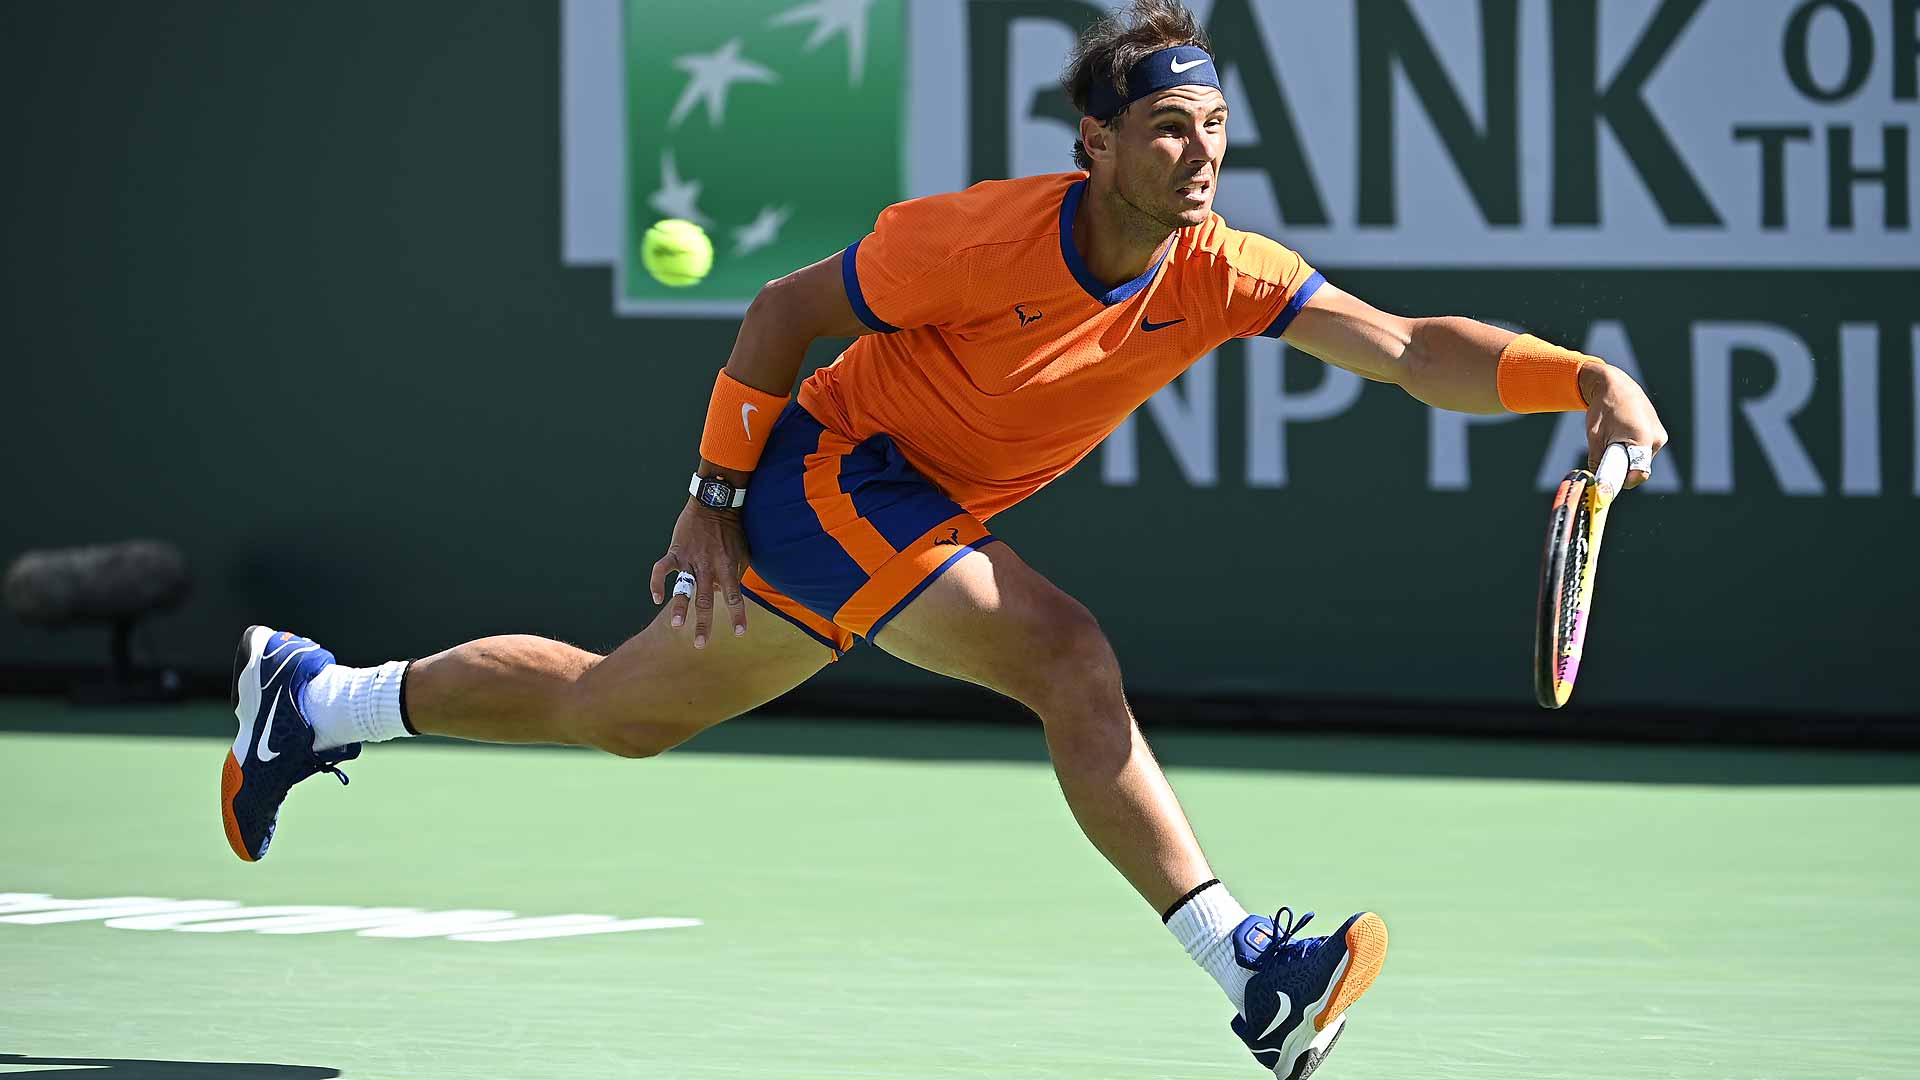 Rafael Nadal | Overview | ATP Tour | Tennis